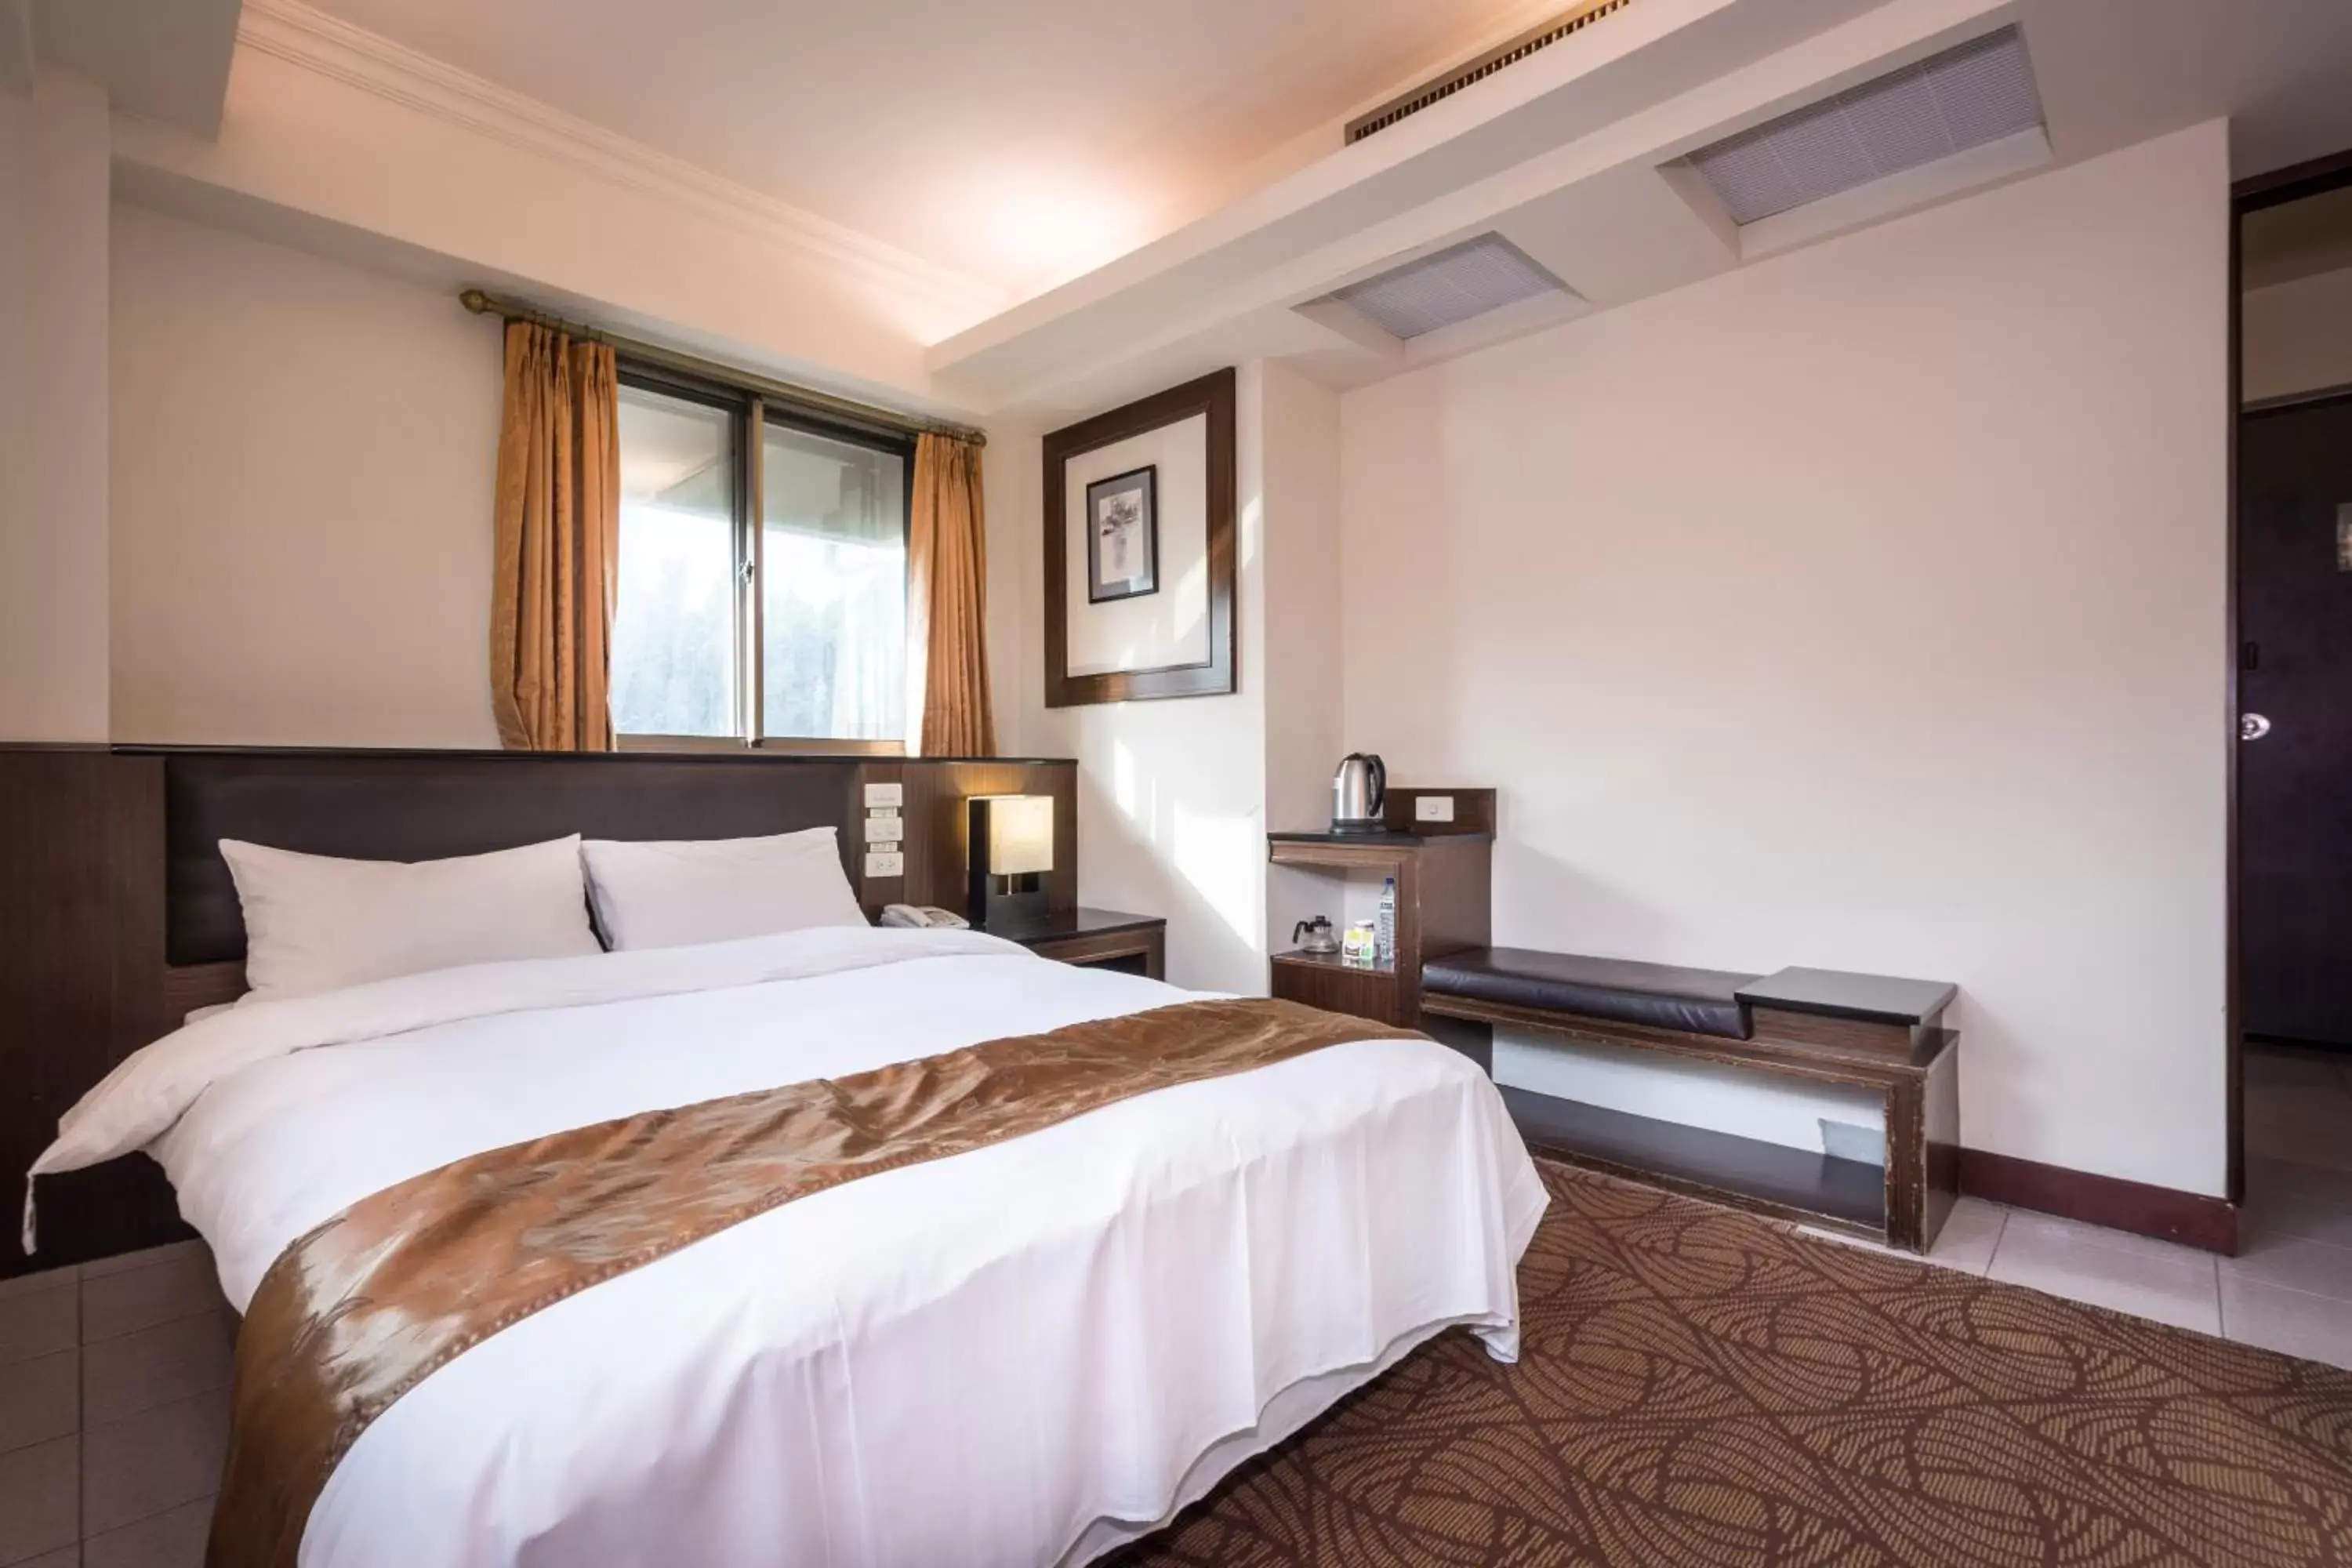 bunk bed, Room Photo in The Enterpriser Hotel